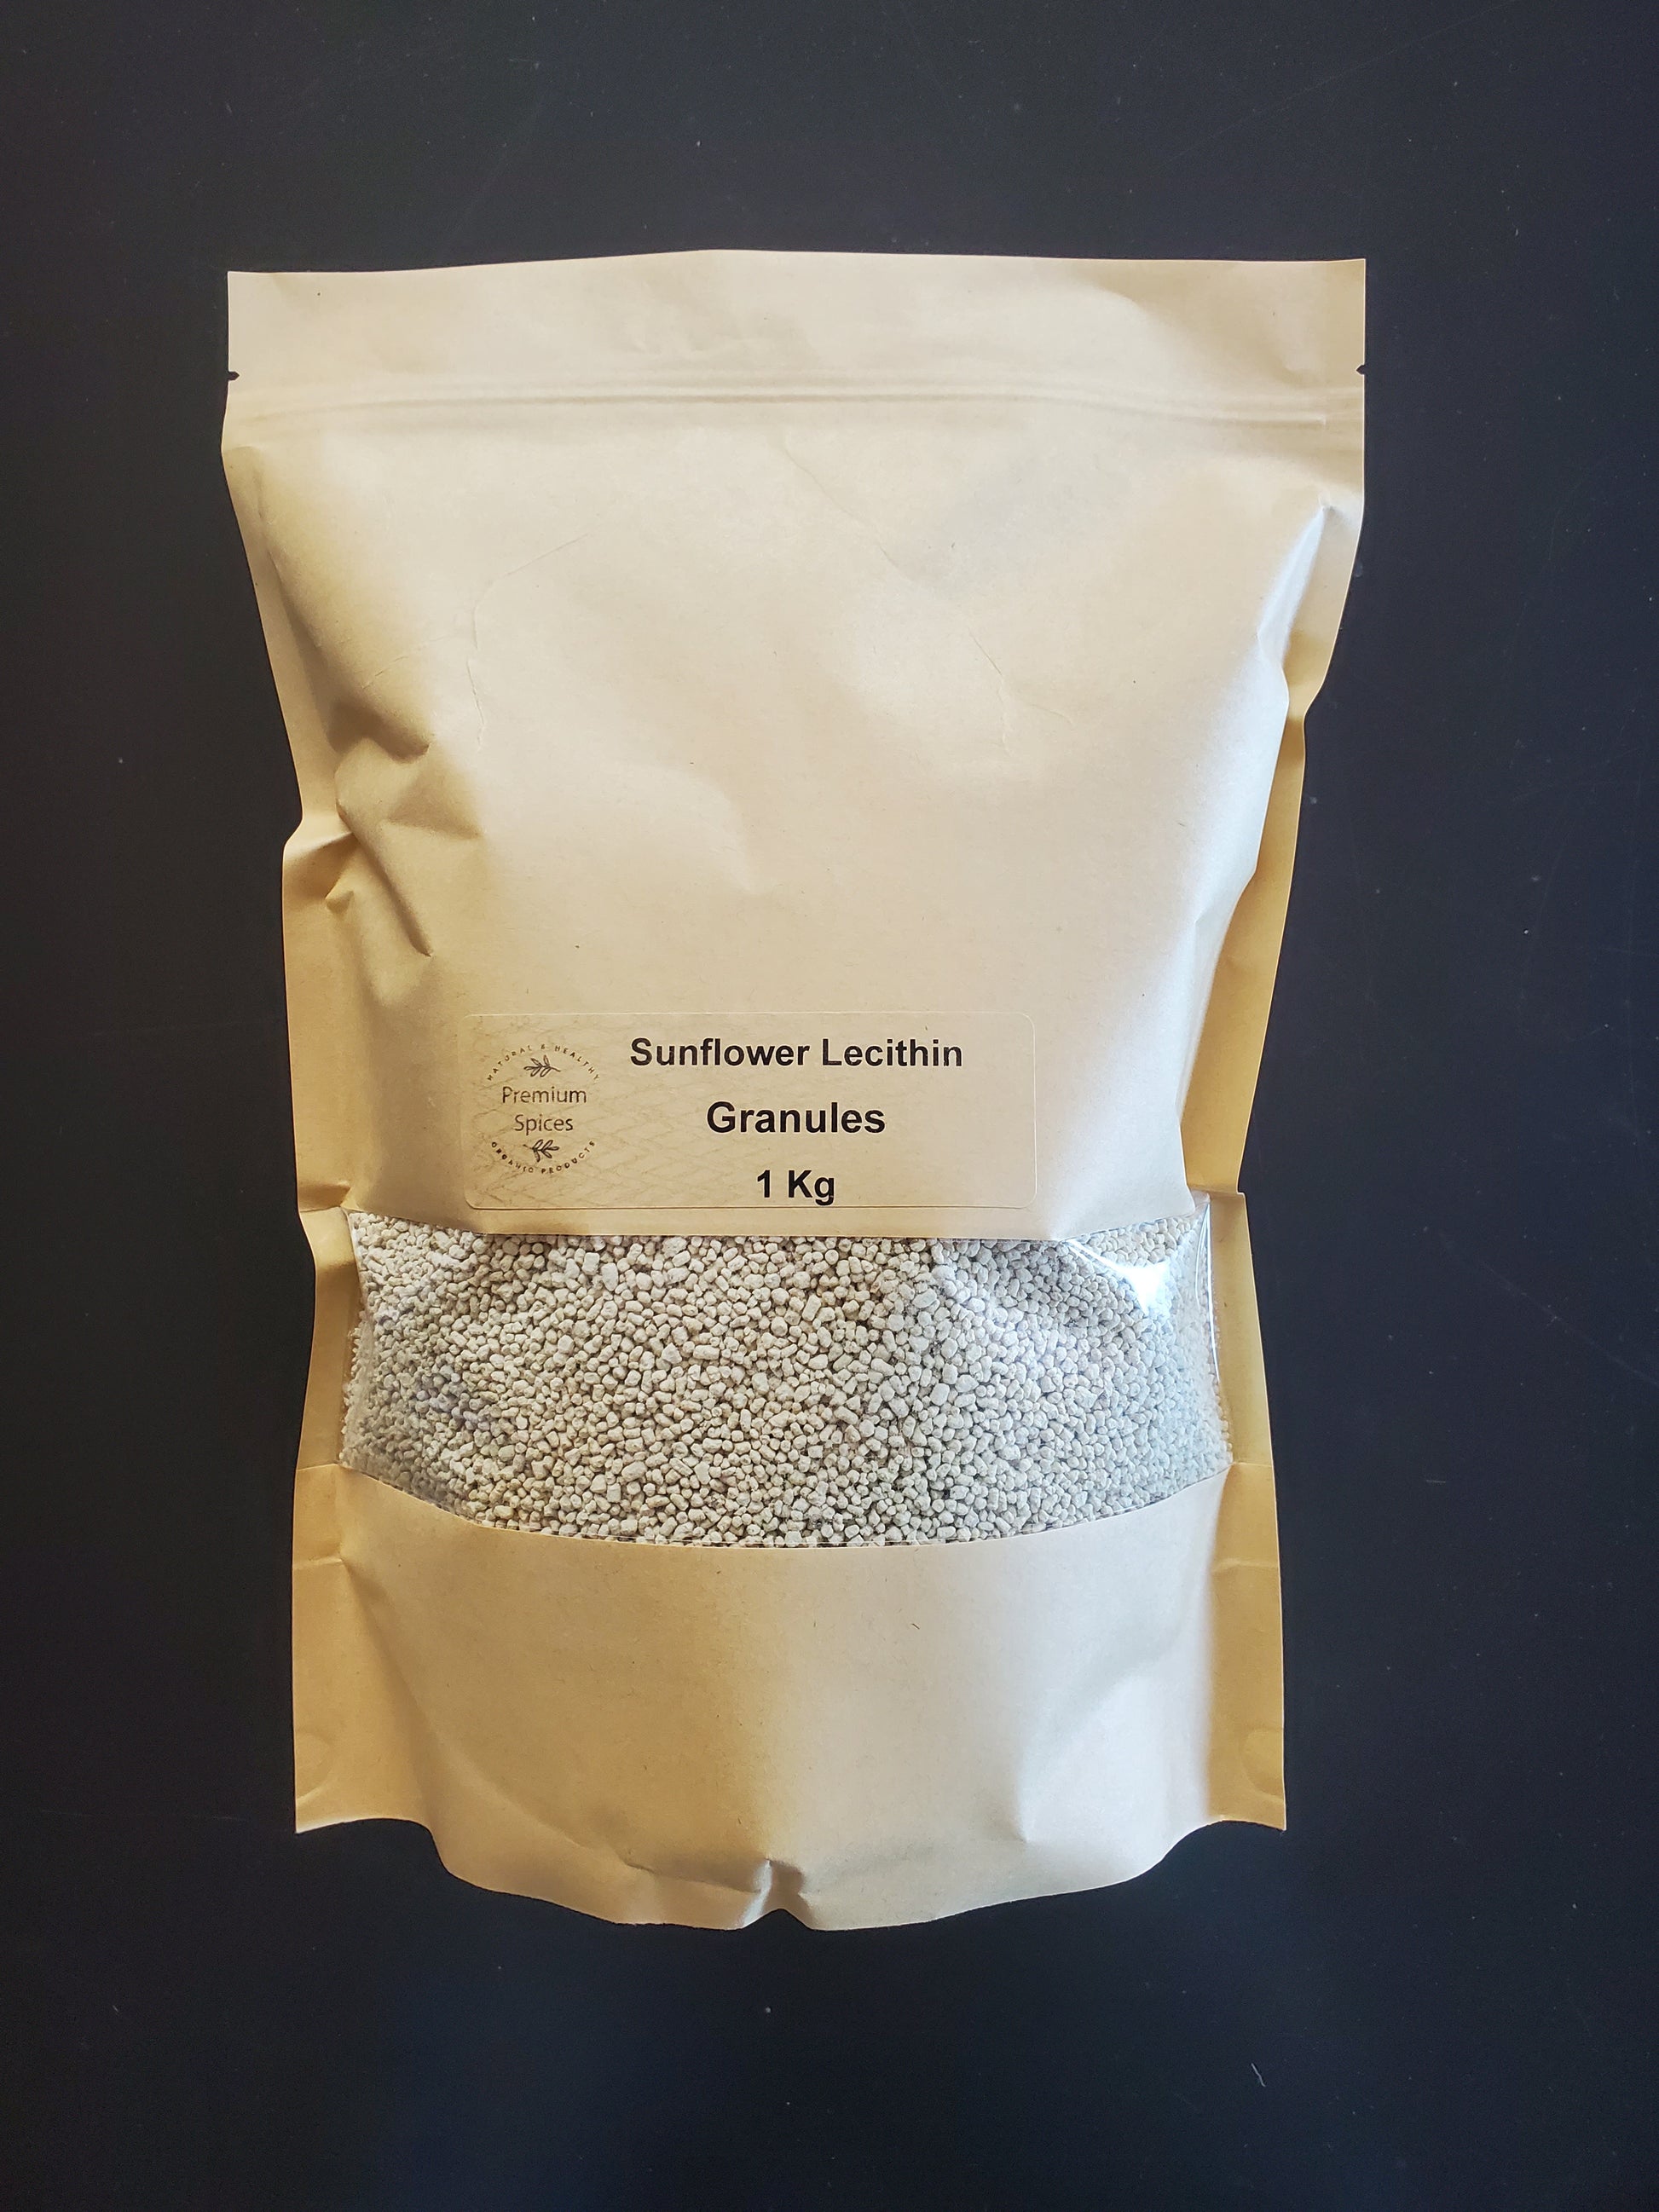 Sunflower Lecithin Granules NZ| Sunflower Lecithin  |  - Showing 1kg packing